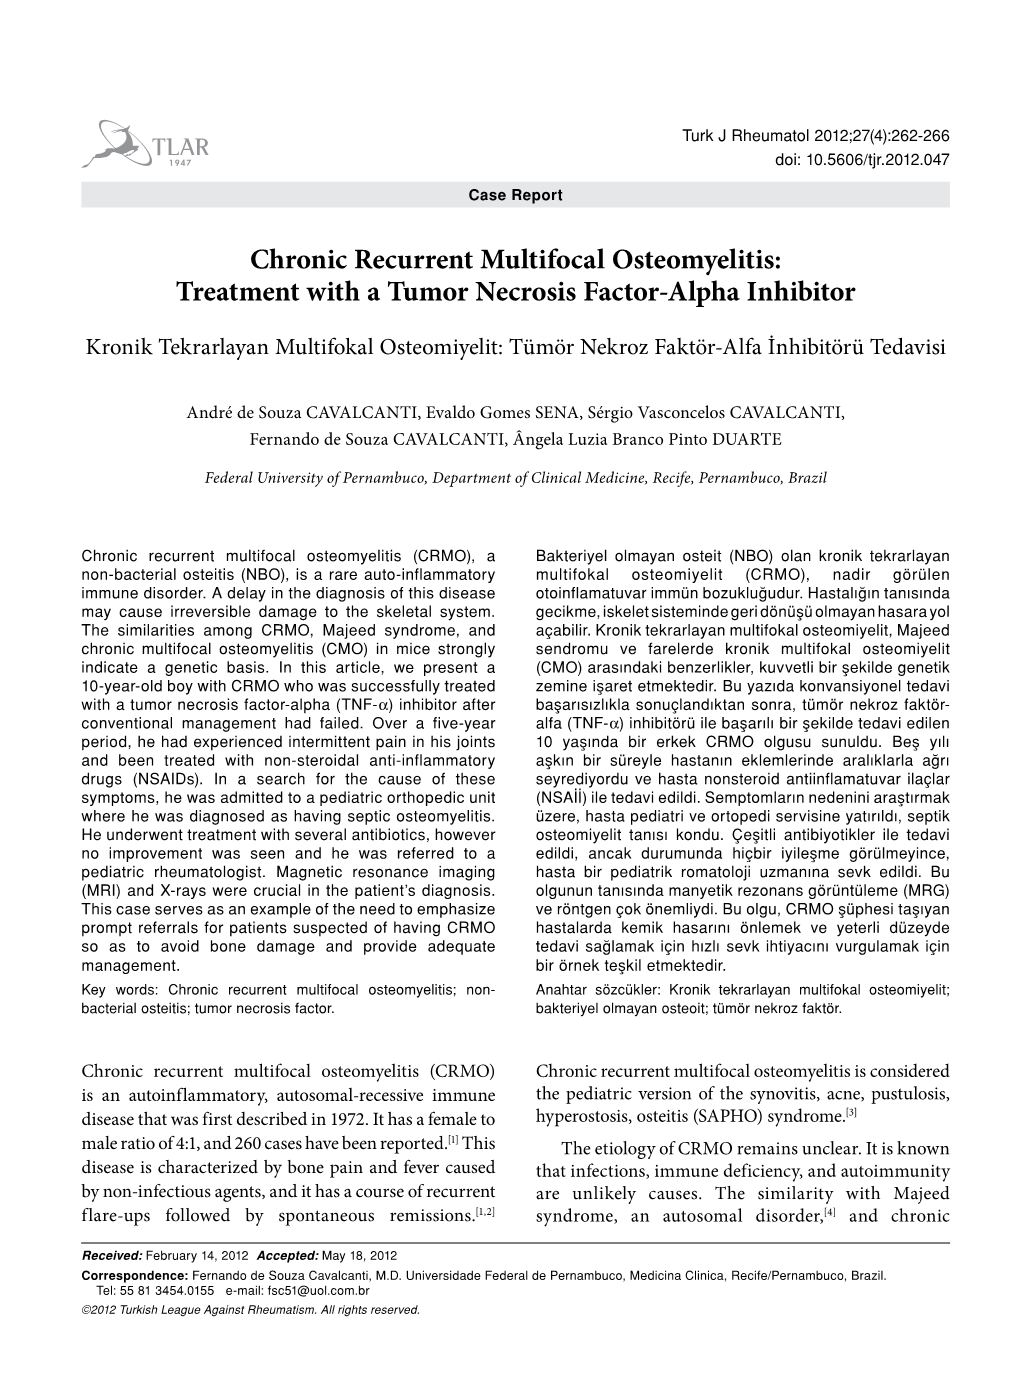 Chronic Recurrent Multifocal Osteomyelitis: Treatment with a Tumor Necrosis Factor-Alpha Inhibitor